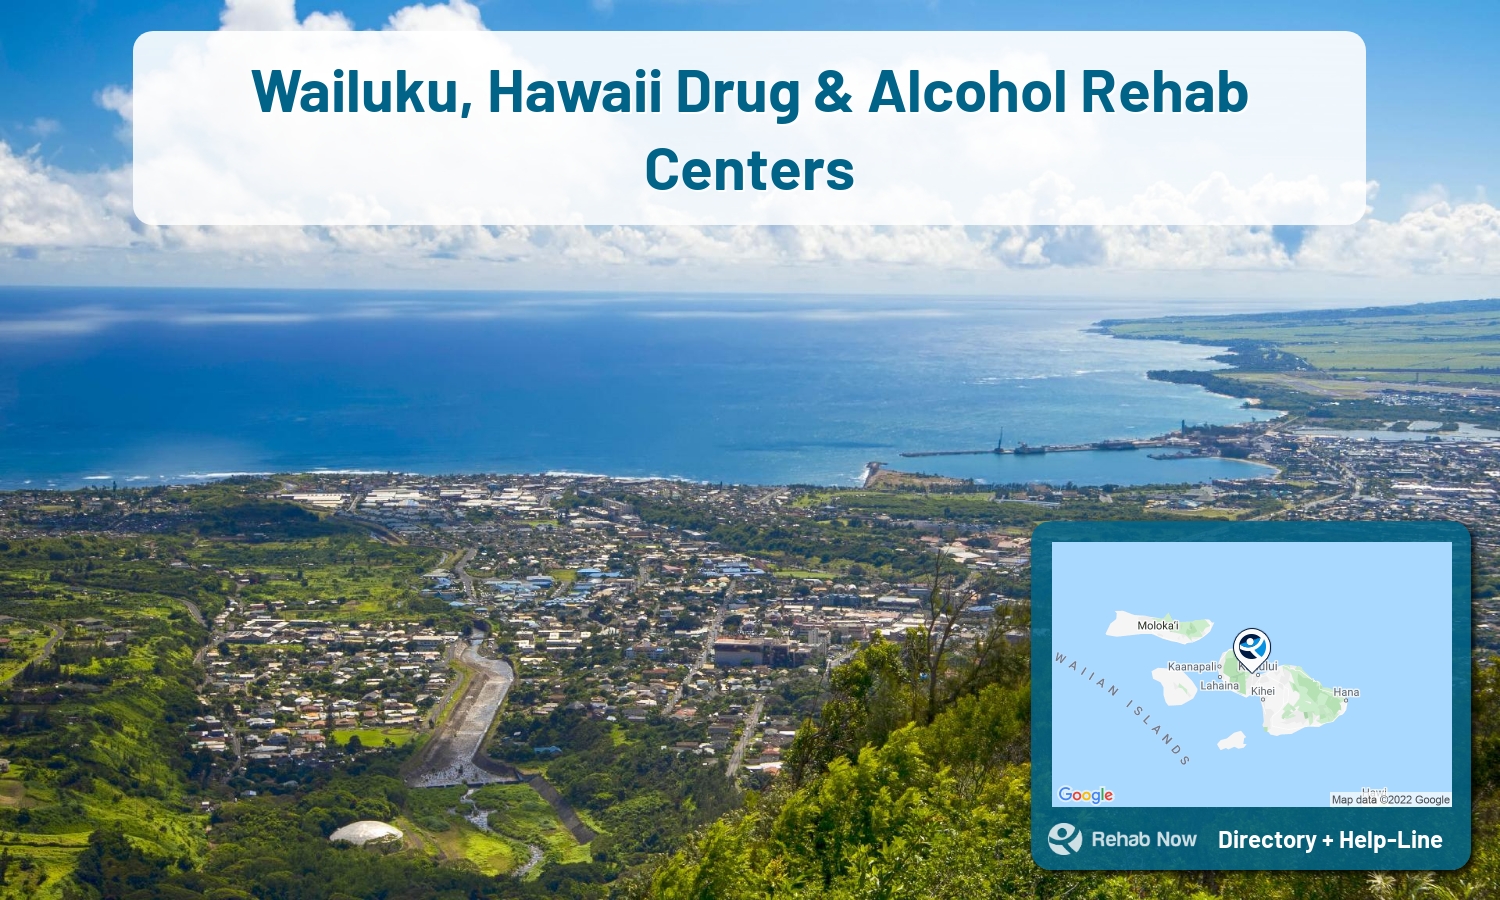 Wailuku, HI Treatment Centers. Find drug rehab in Wailuku, Hawaii, or detox and treatment programs. Get the right help now!